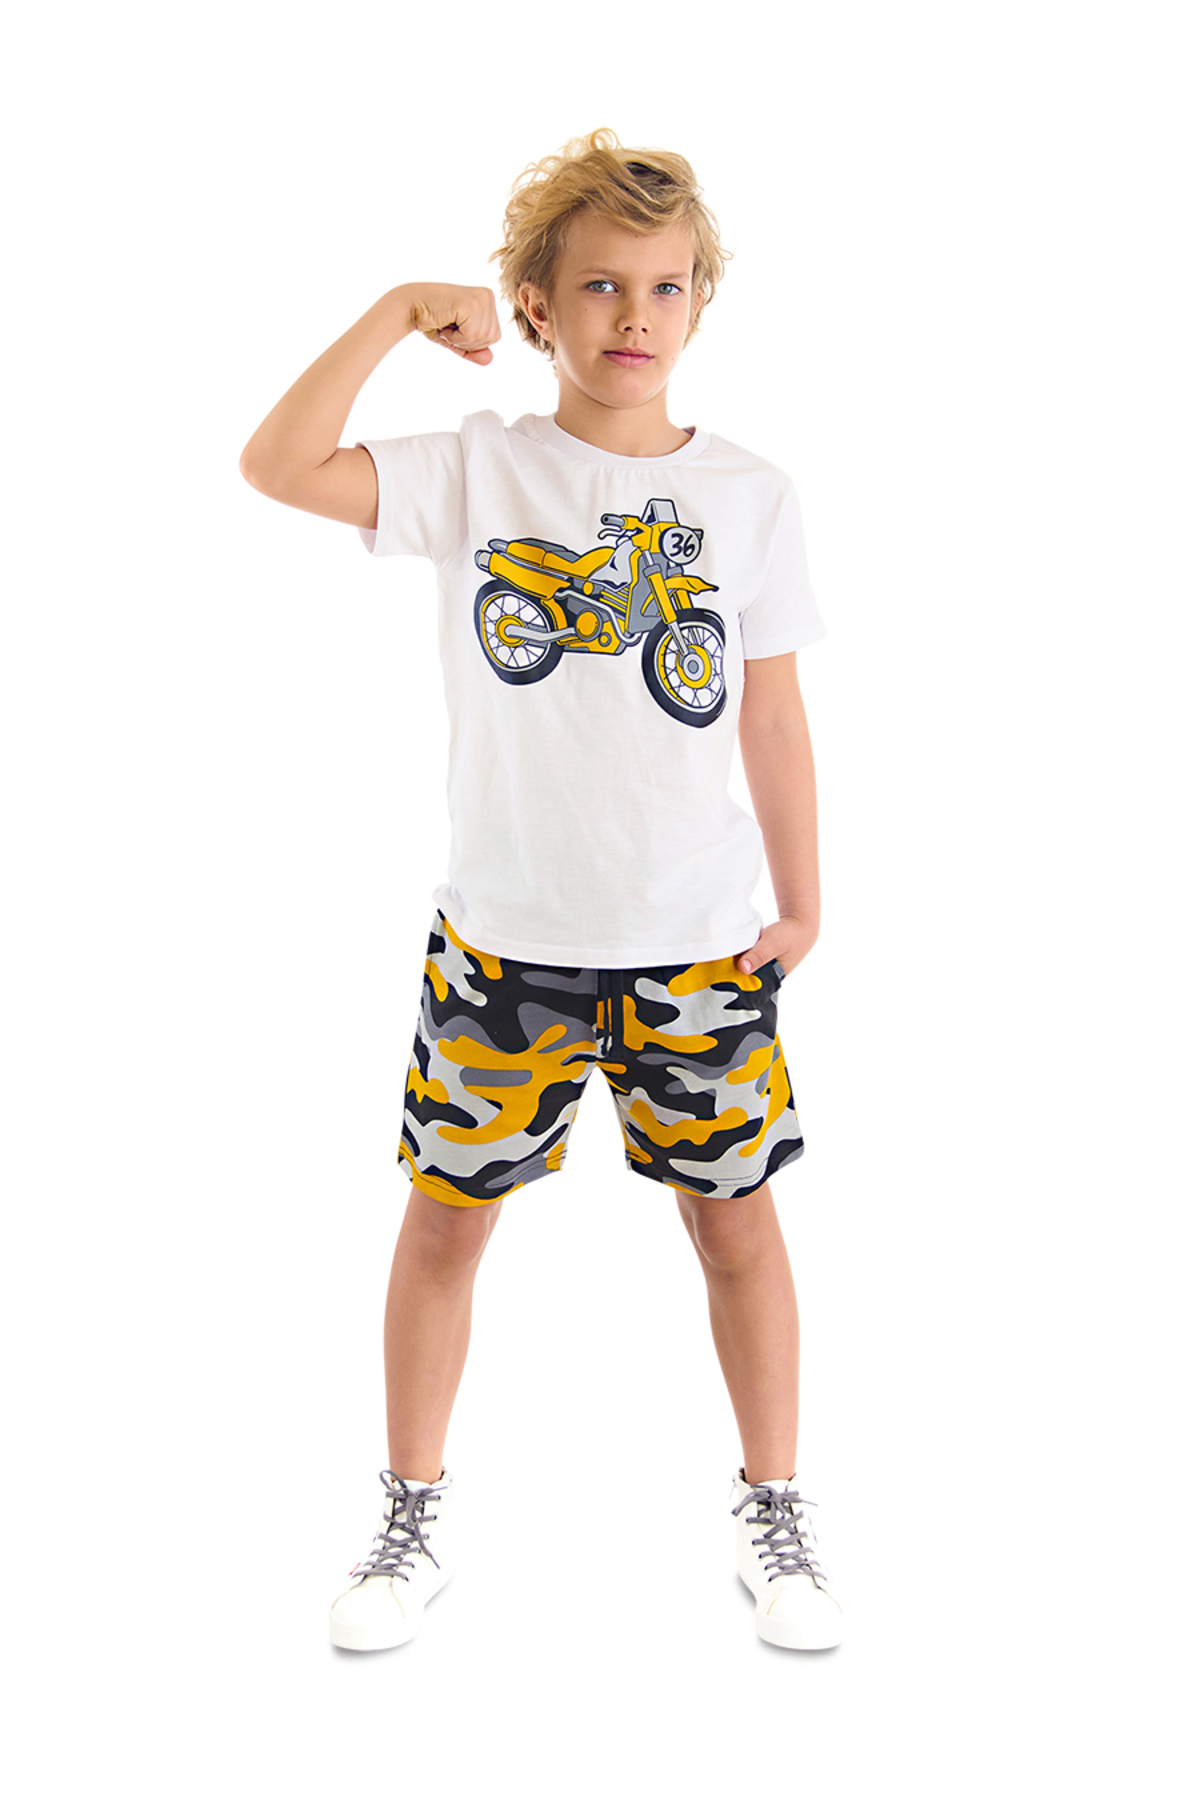 mshb&g Motorcycle Boy T-shirt Shorts Set